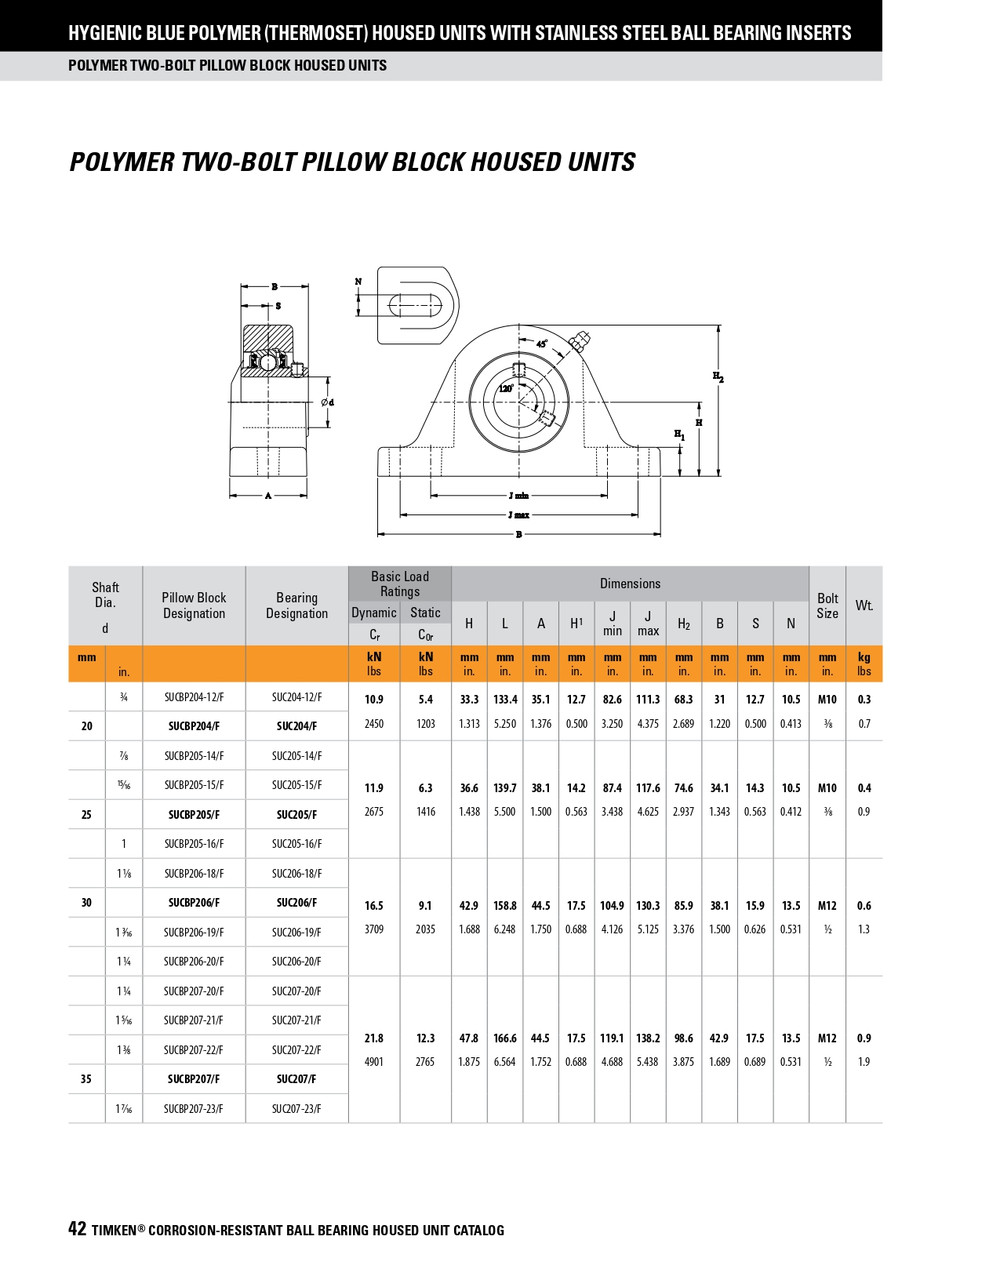 1-1/4" Hygienic Polymer Set Screw Pillow Block Assembly   SUCBP206-20/FVSL613